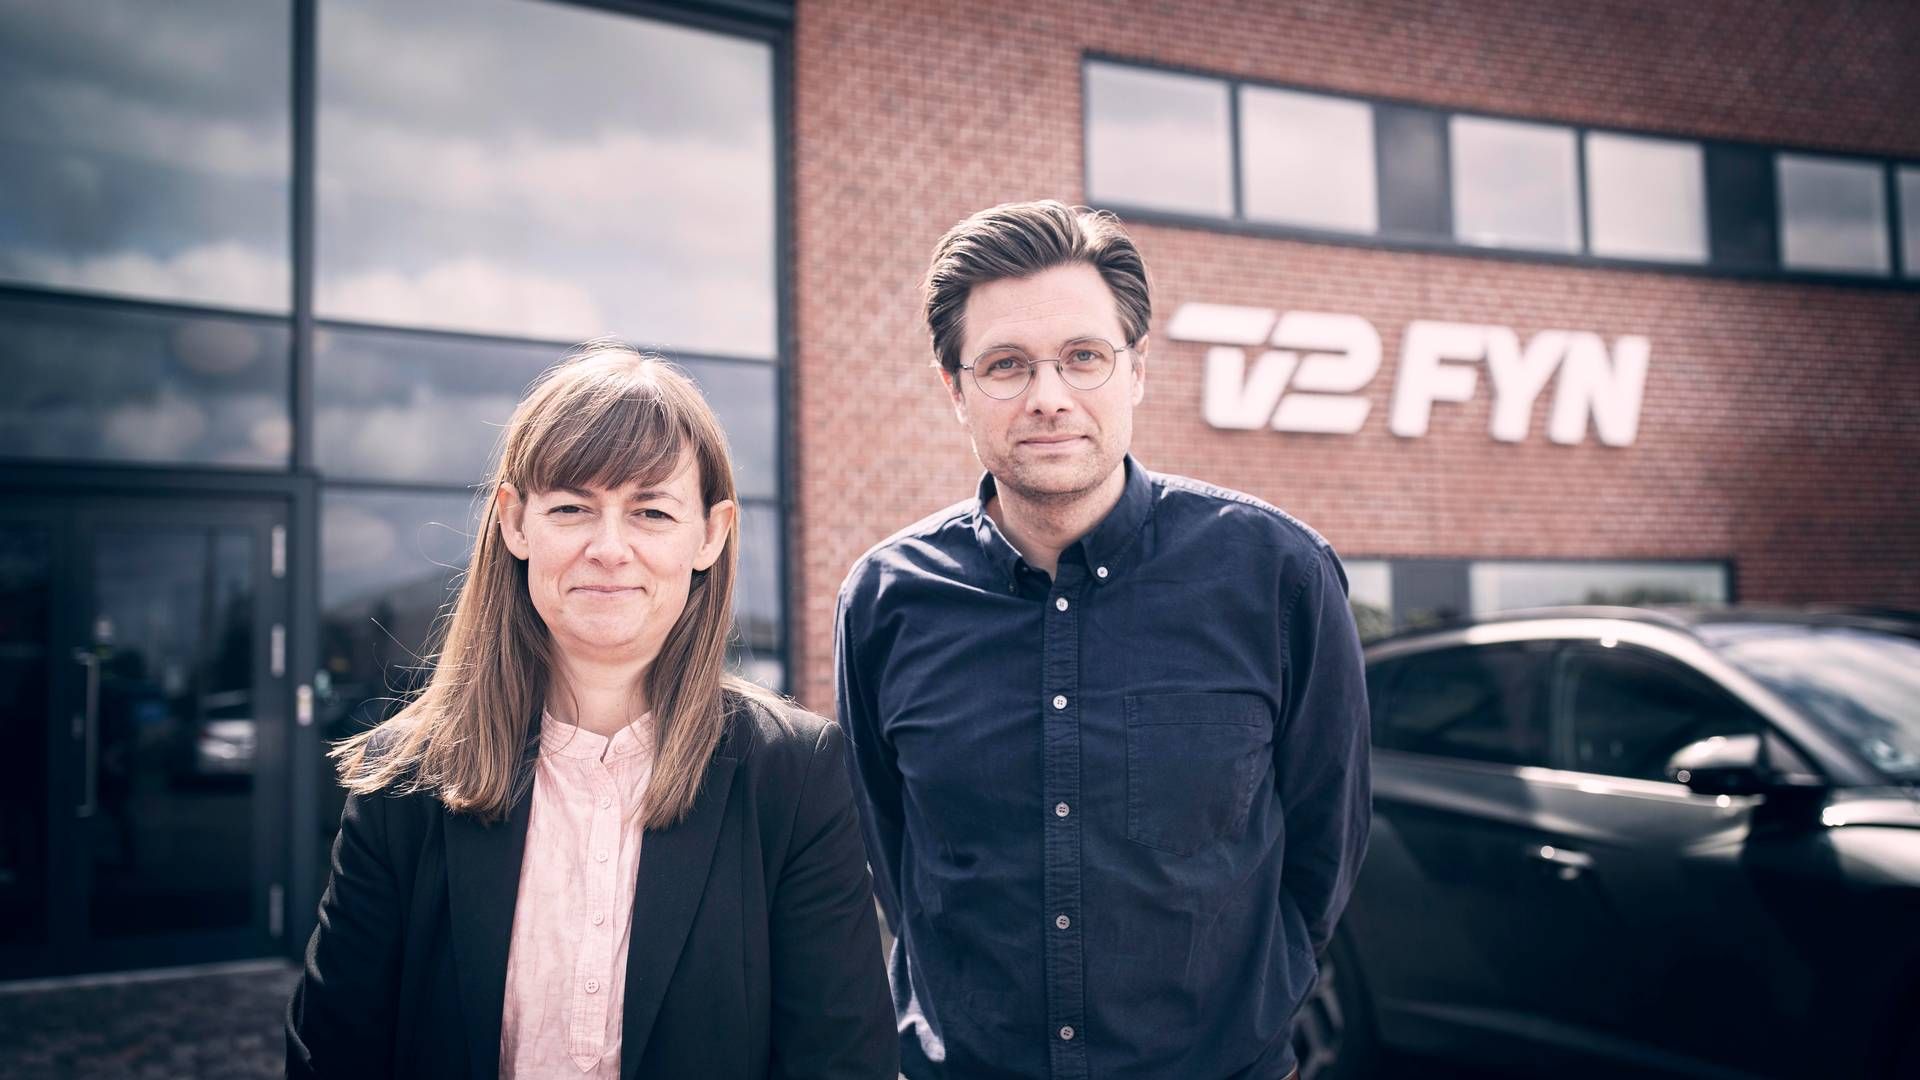 Anne Kastrup Mensbo og Lasse Hørbye er henholdsvis ny administrationschef og ny chefredaktør på TV 2 Fyn. | Foto: Louise Koustrup / TV 2 Fyn